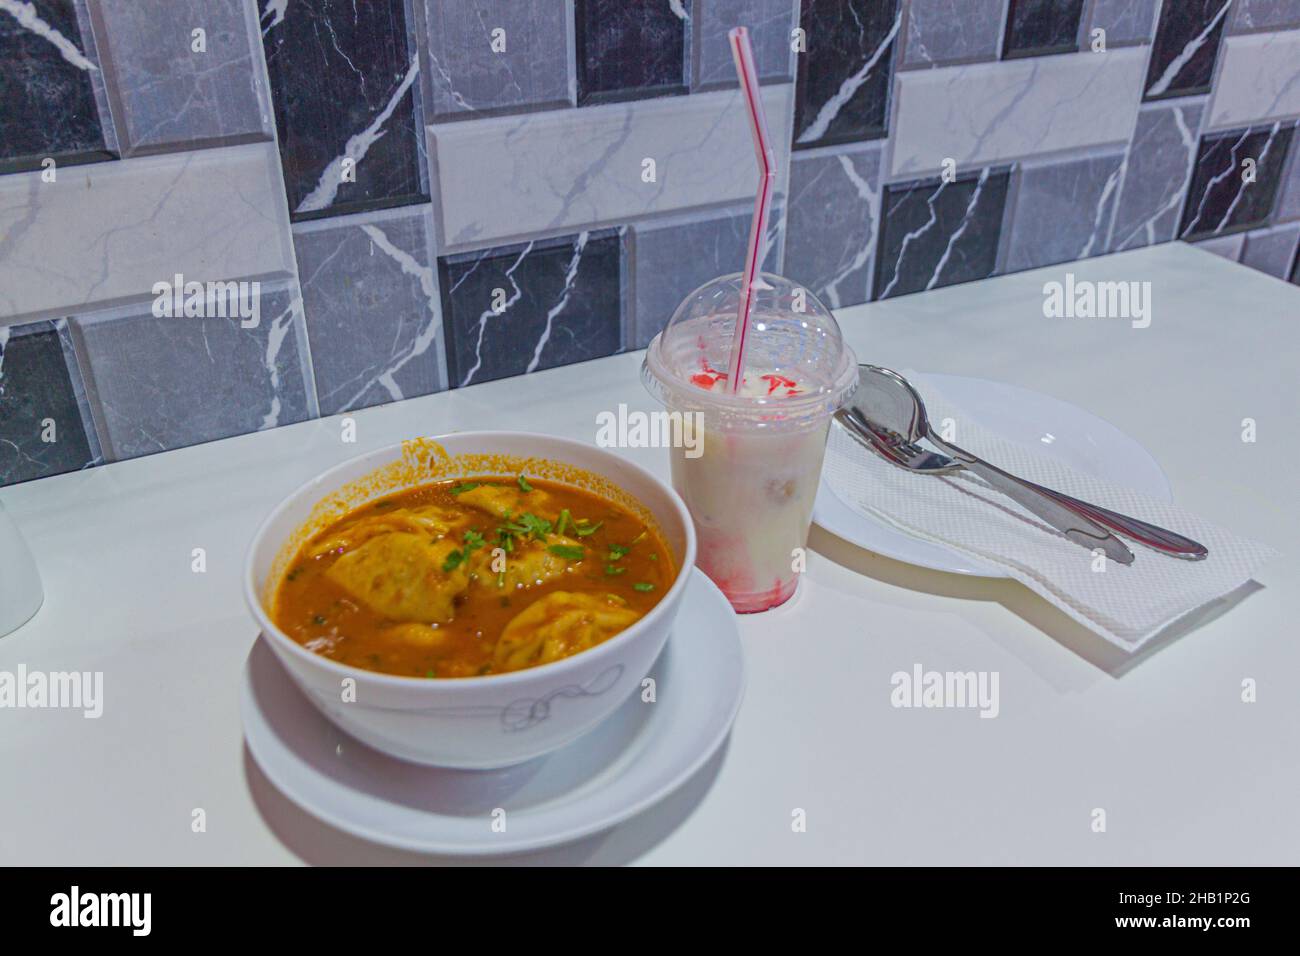 Dumpling soup with a milk drink in an eatery in Dubai, UAE Stock Photo